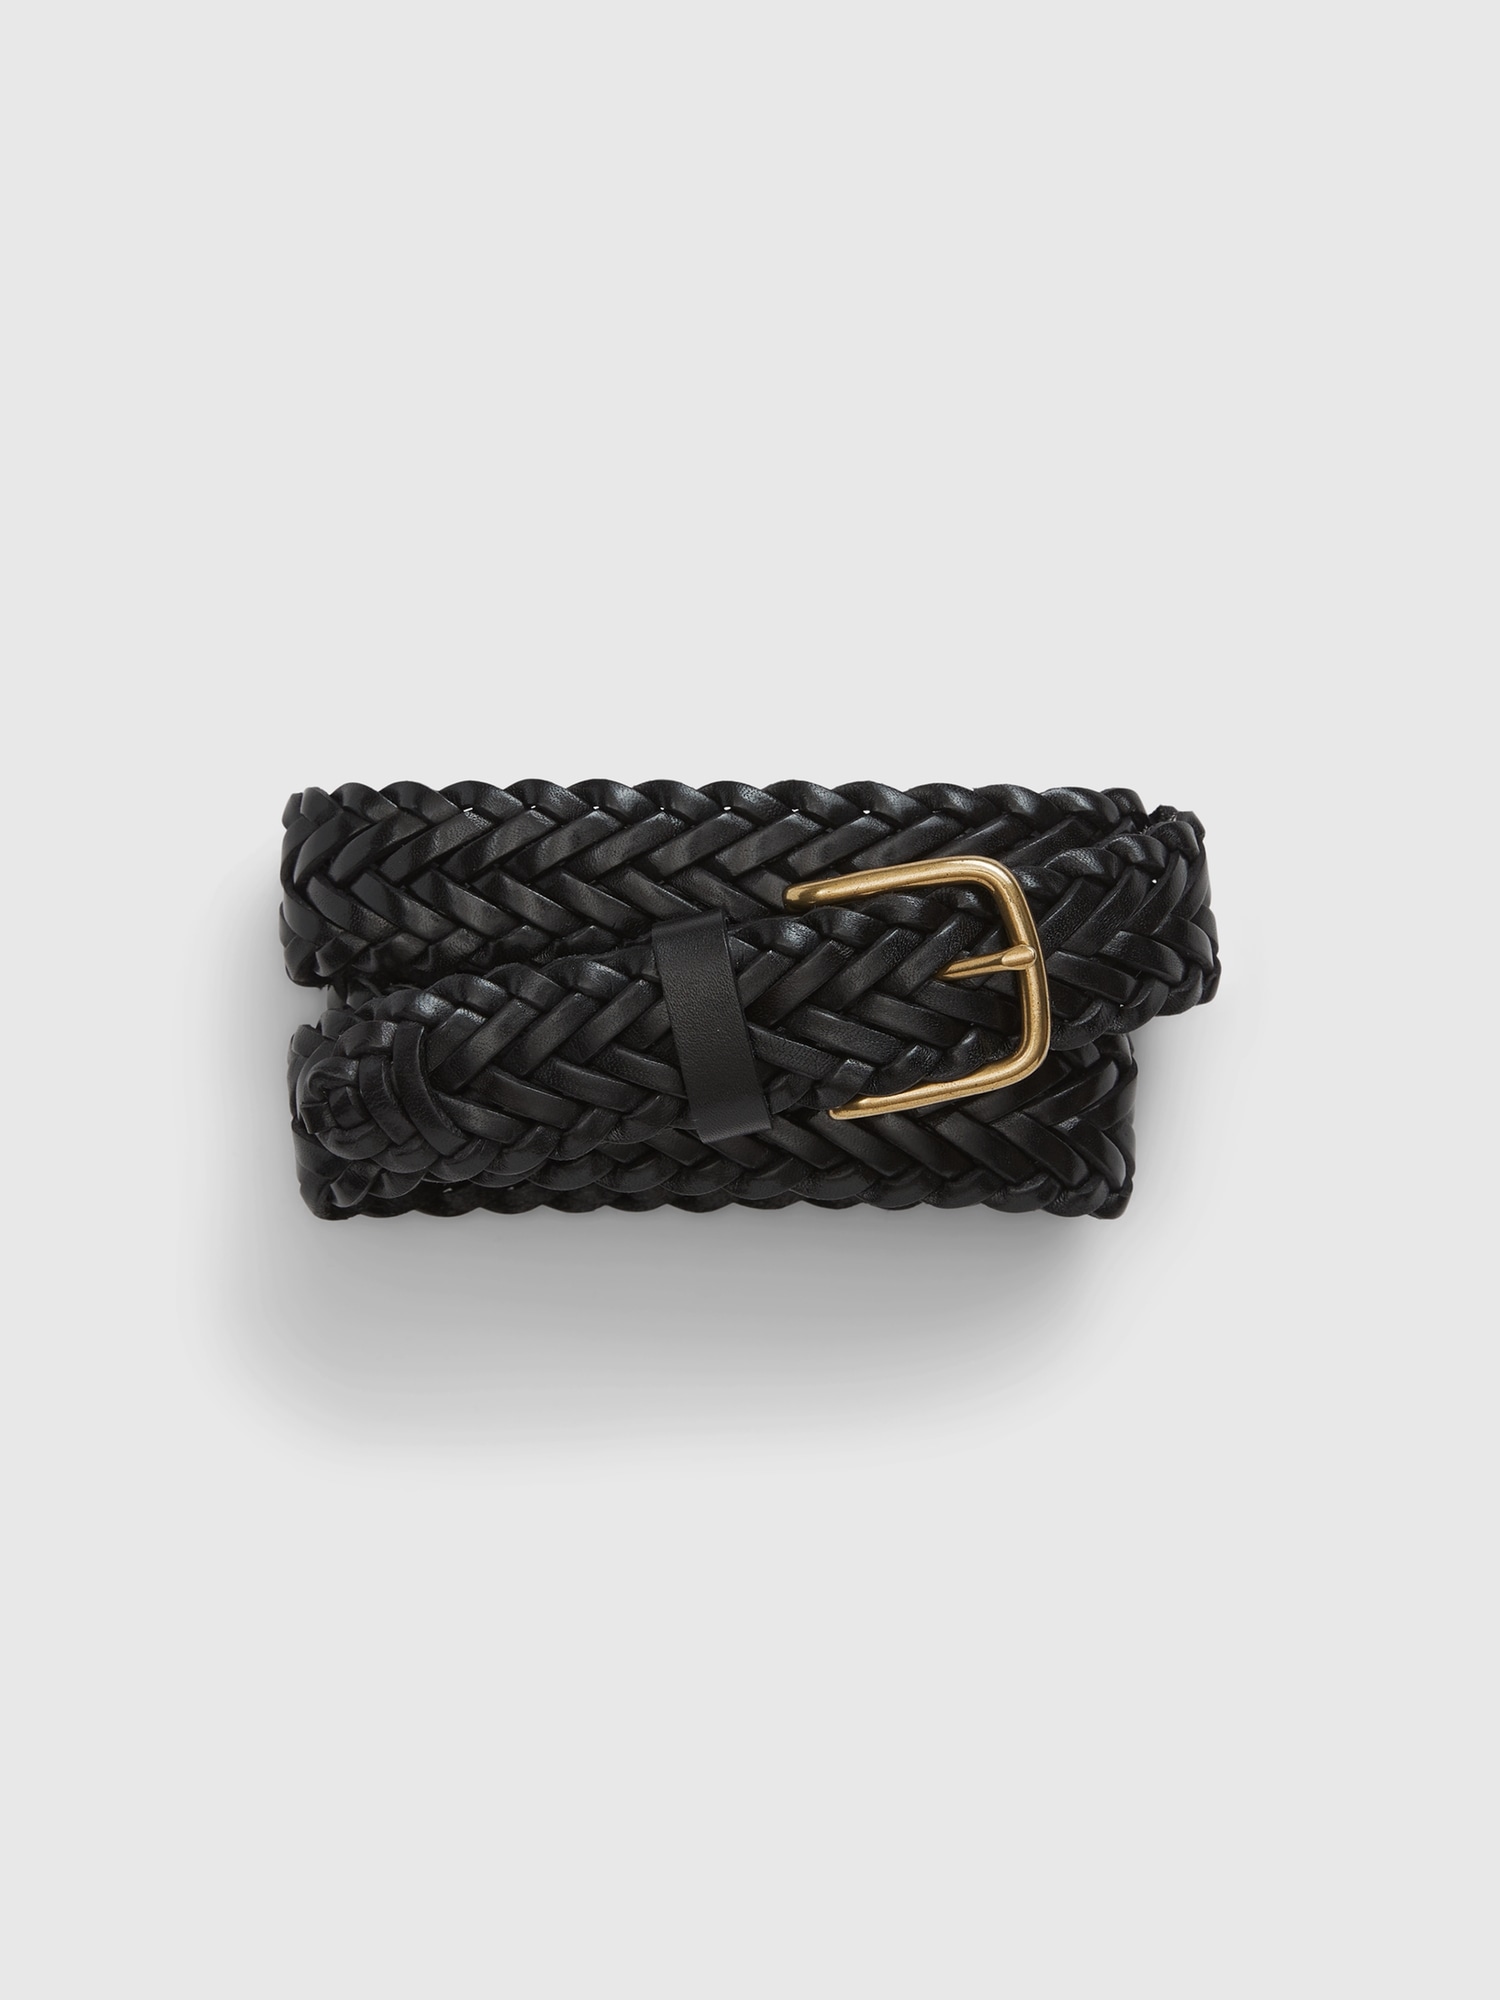 Braided Belt. L / Black